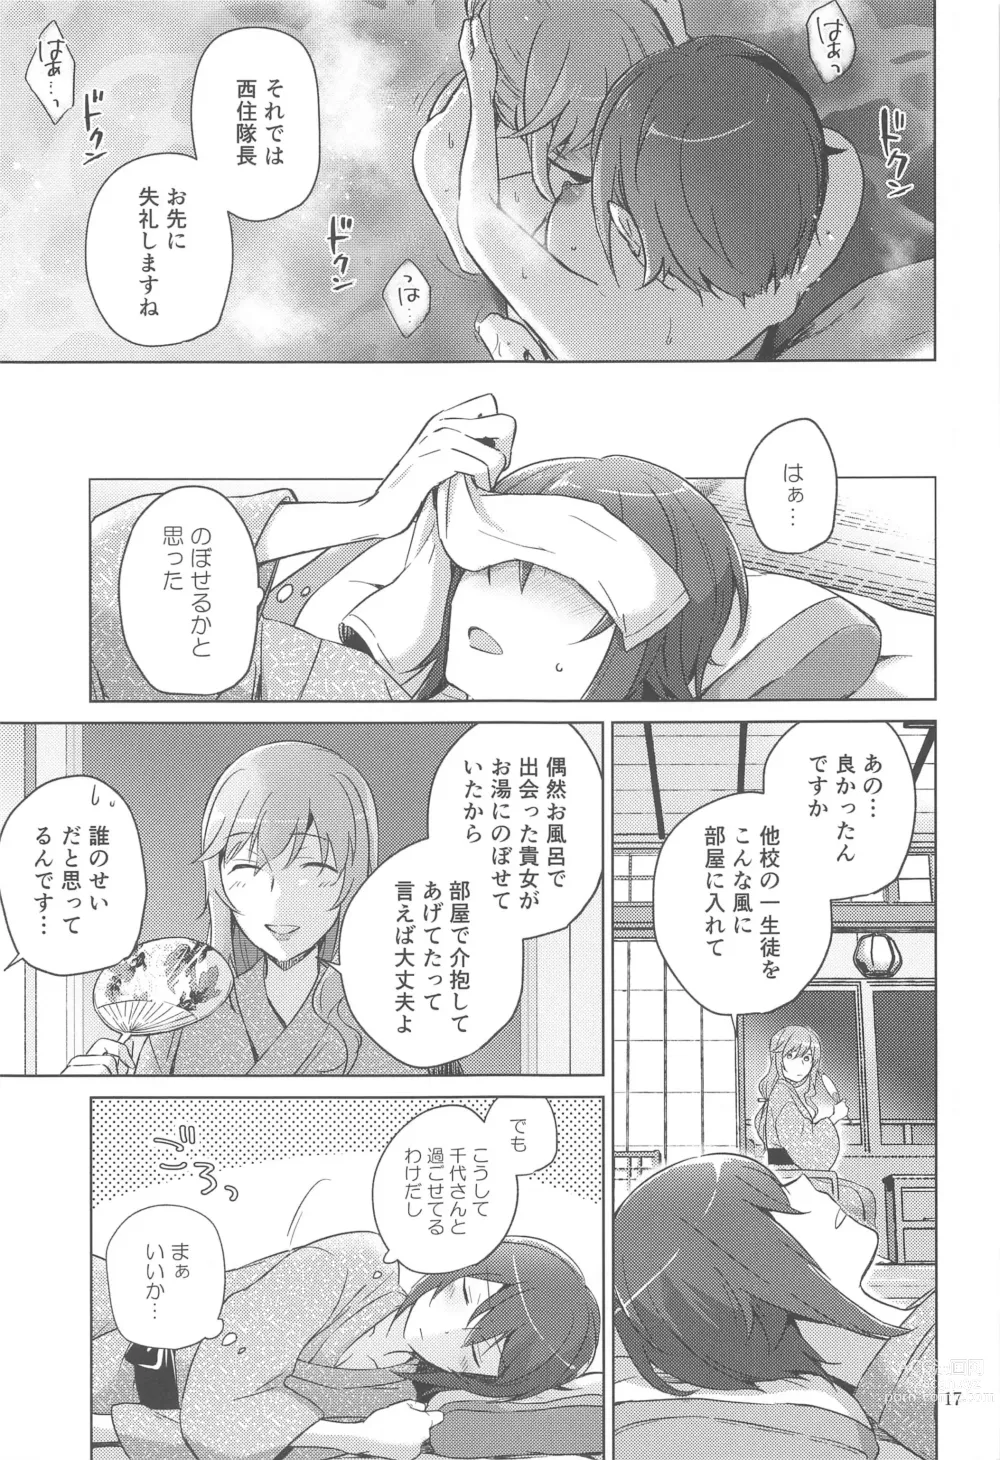 Page 16 of doujinshi Nishizumi to Shimada 2